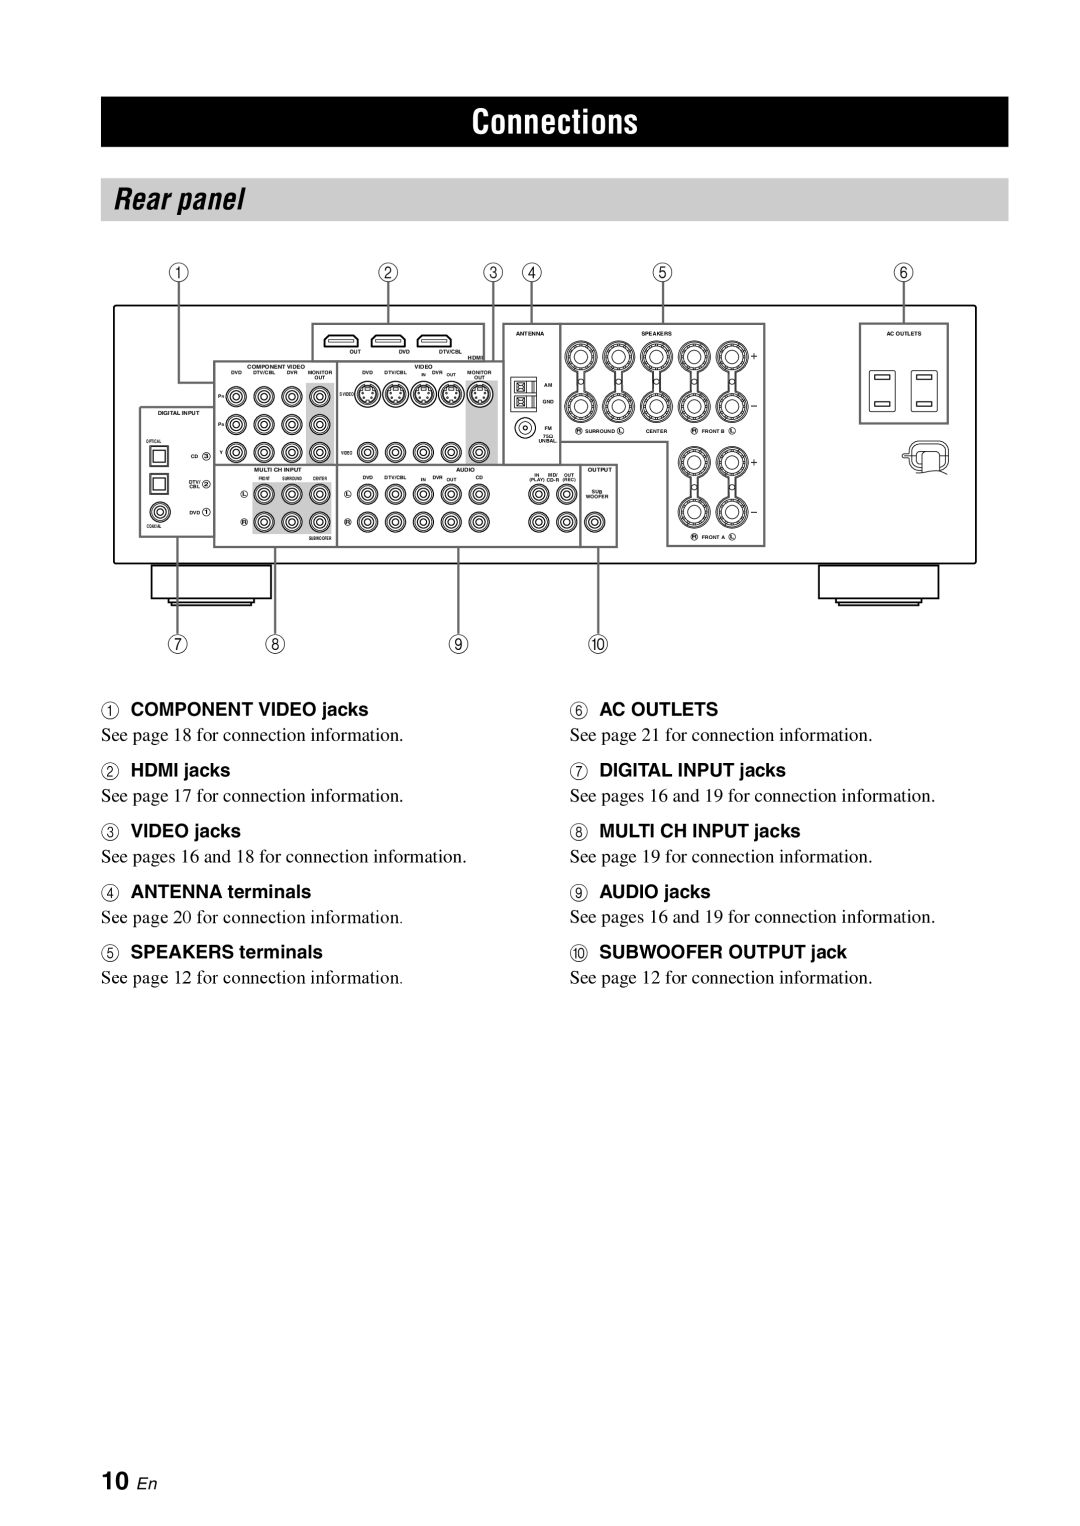 Yamaha RX-V561 owner manual Connections, Rear panel, 10 En 